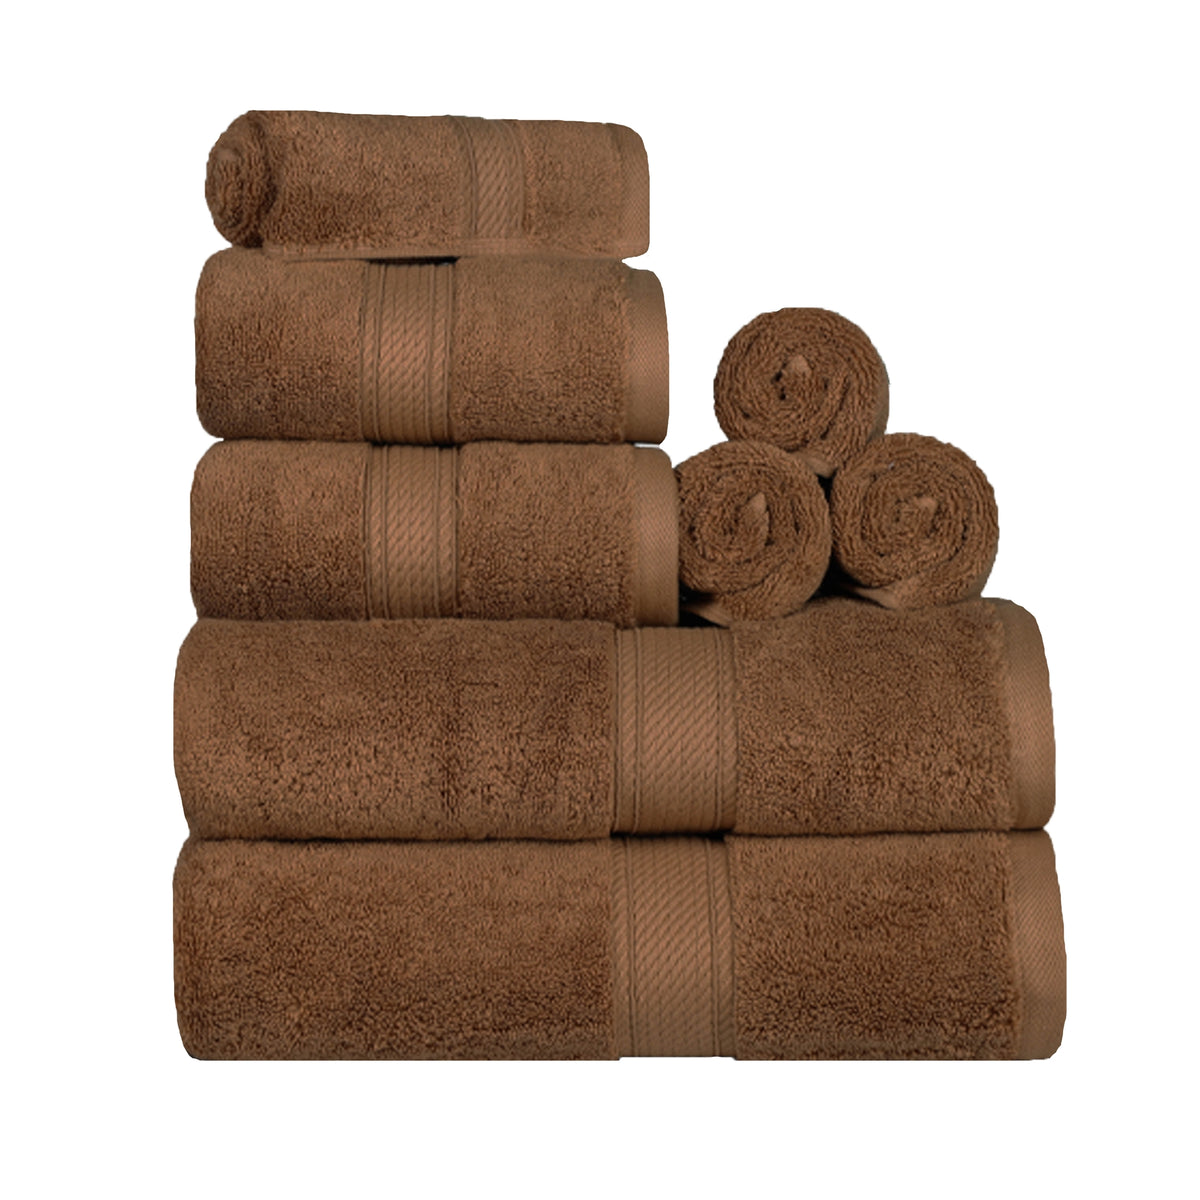 Egyptian Cotton Heavyweight 8 Piece Towel Set - Chocolate